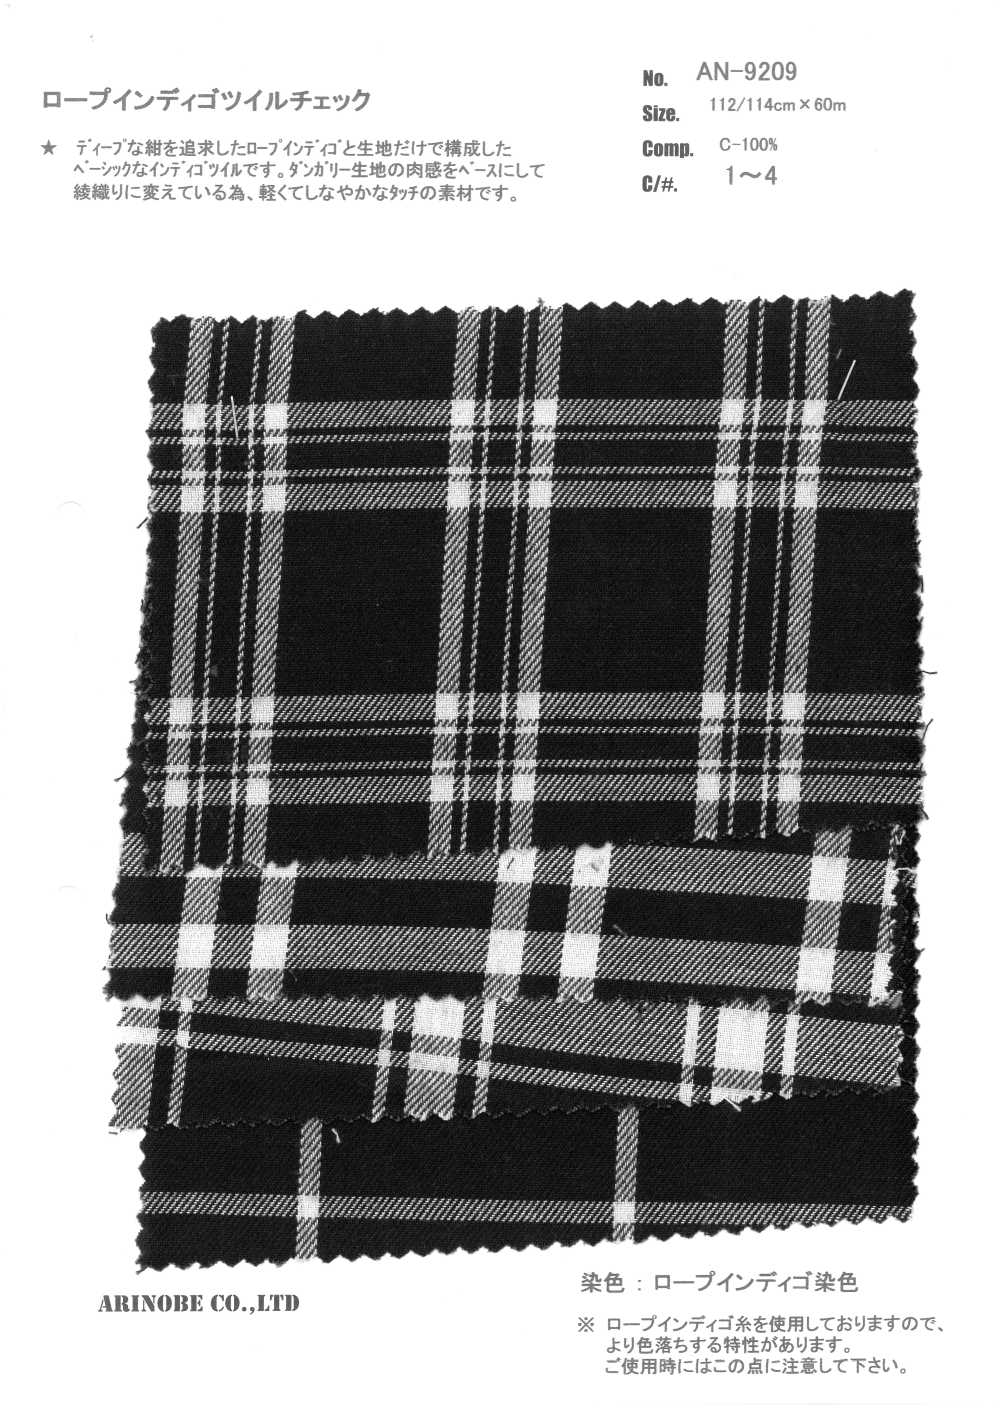 AN-9209 Rope Indigo Twill Check[Fabrication De Textile] ARINOBE CO., LTD.